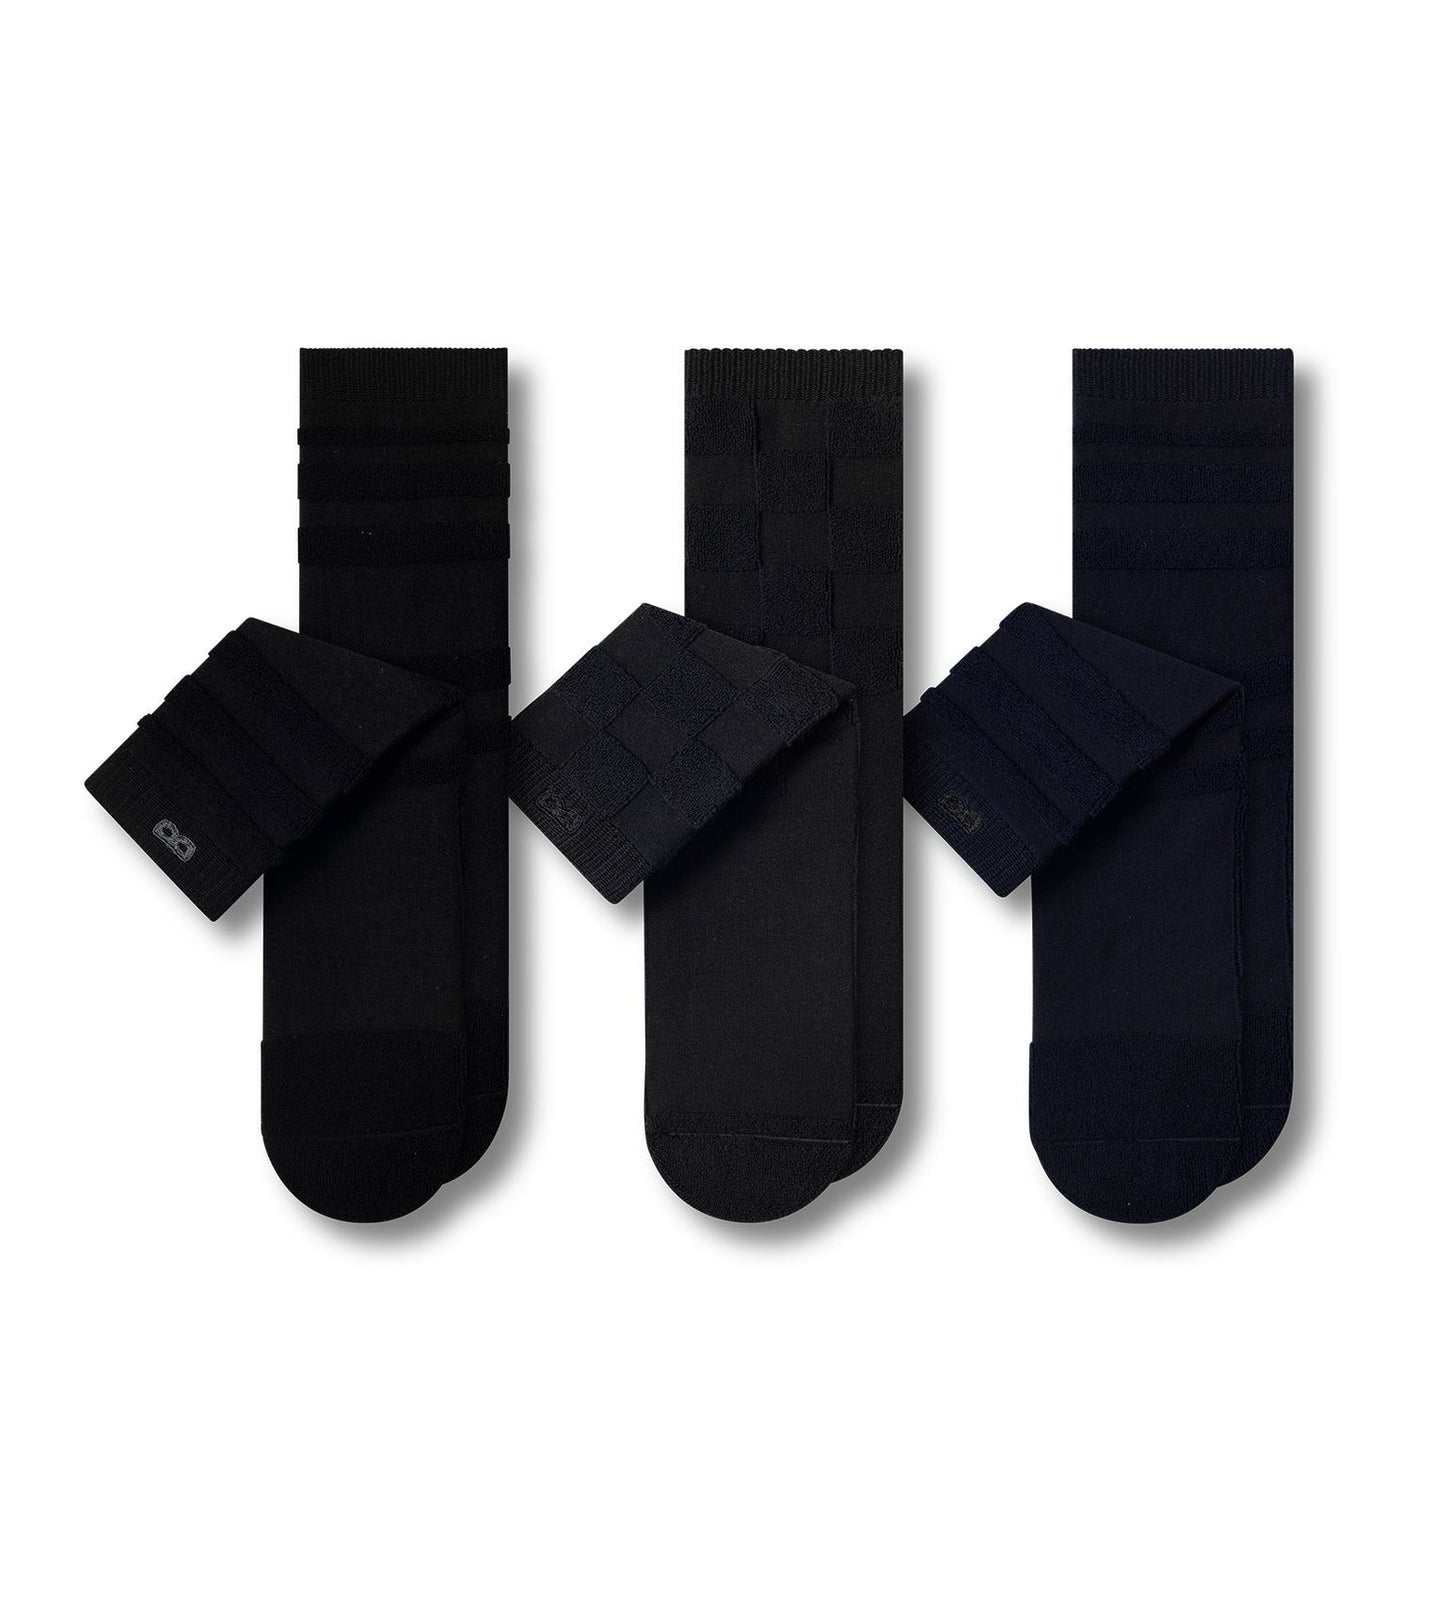 Dark colored crew socks